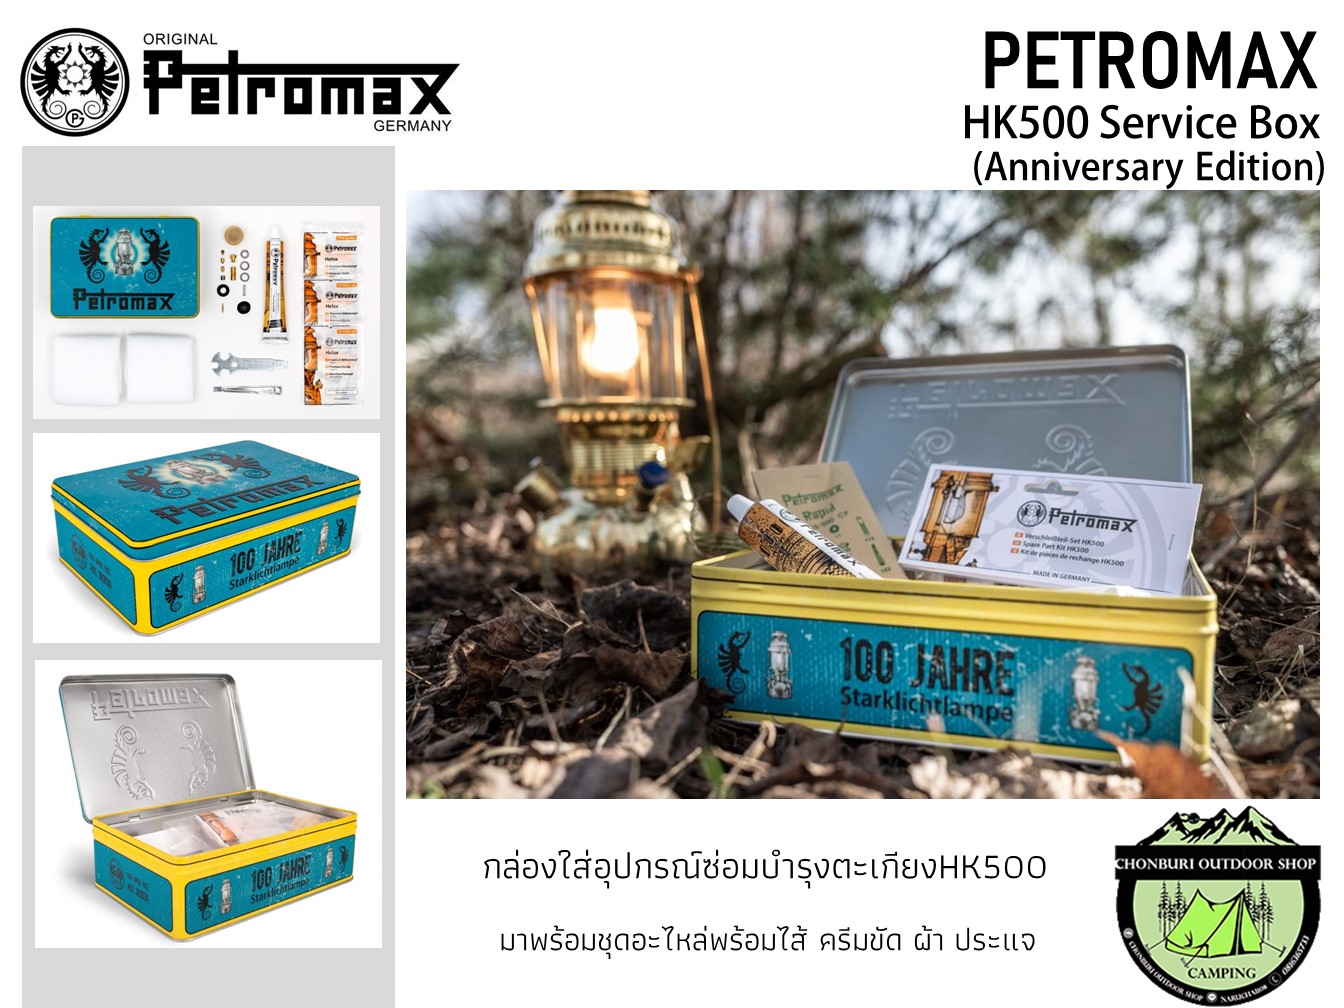 Petromax HK500 Service Box